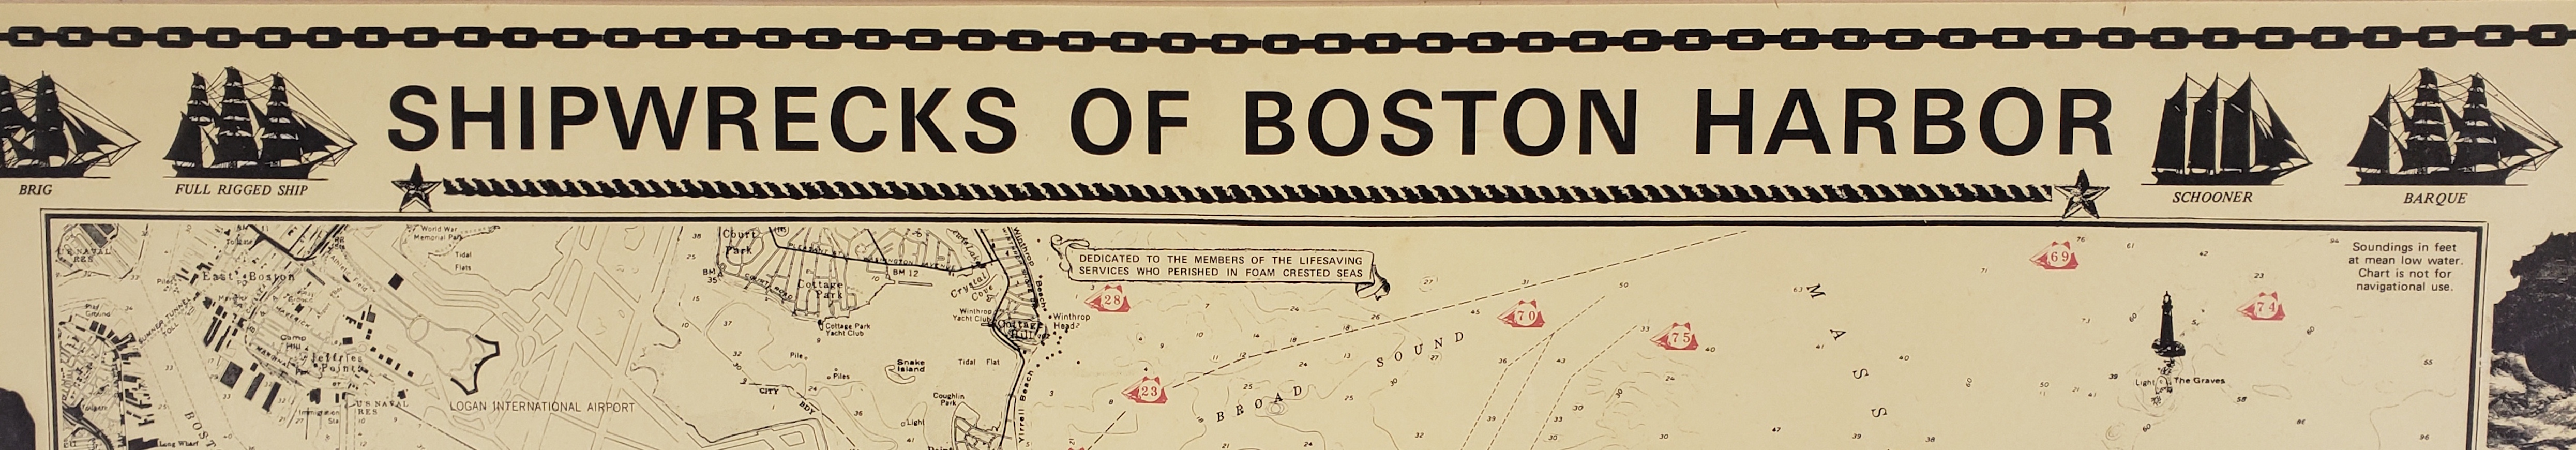 Vintage, “Shipwrecks of Boston Harbor” Pictorial Chart Map, 20th century